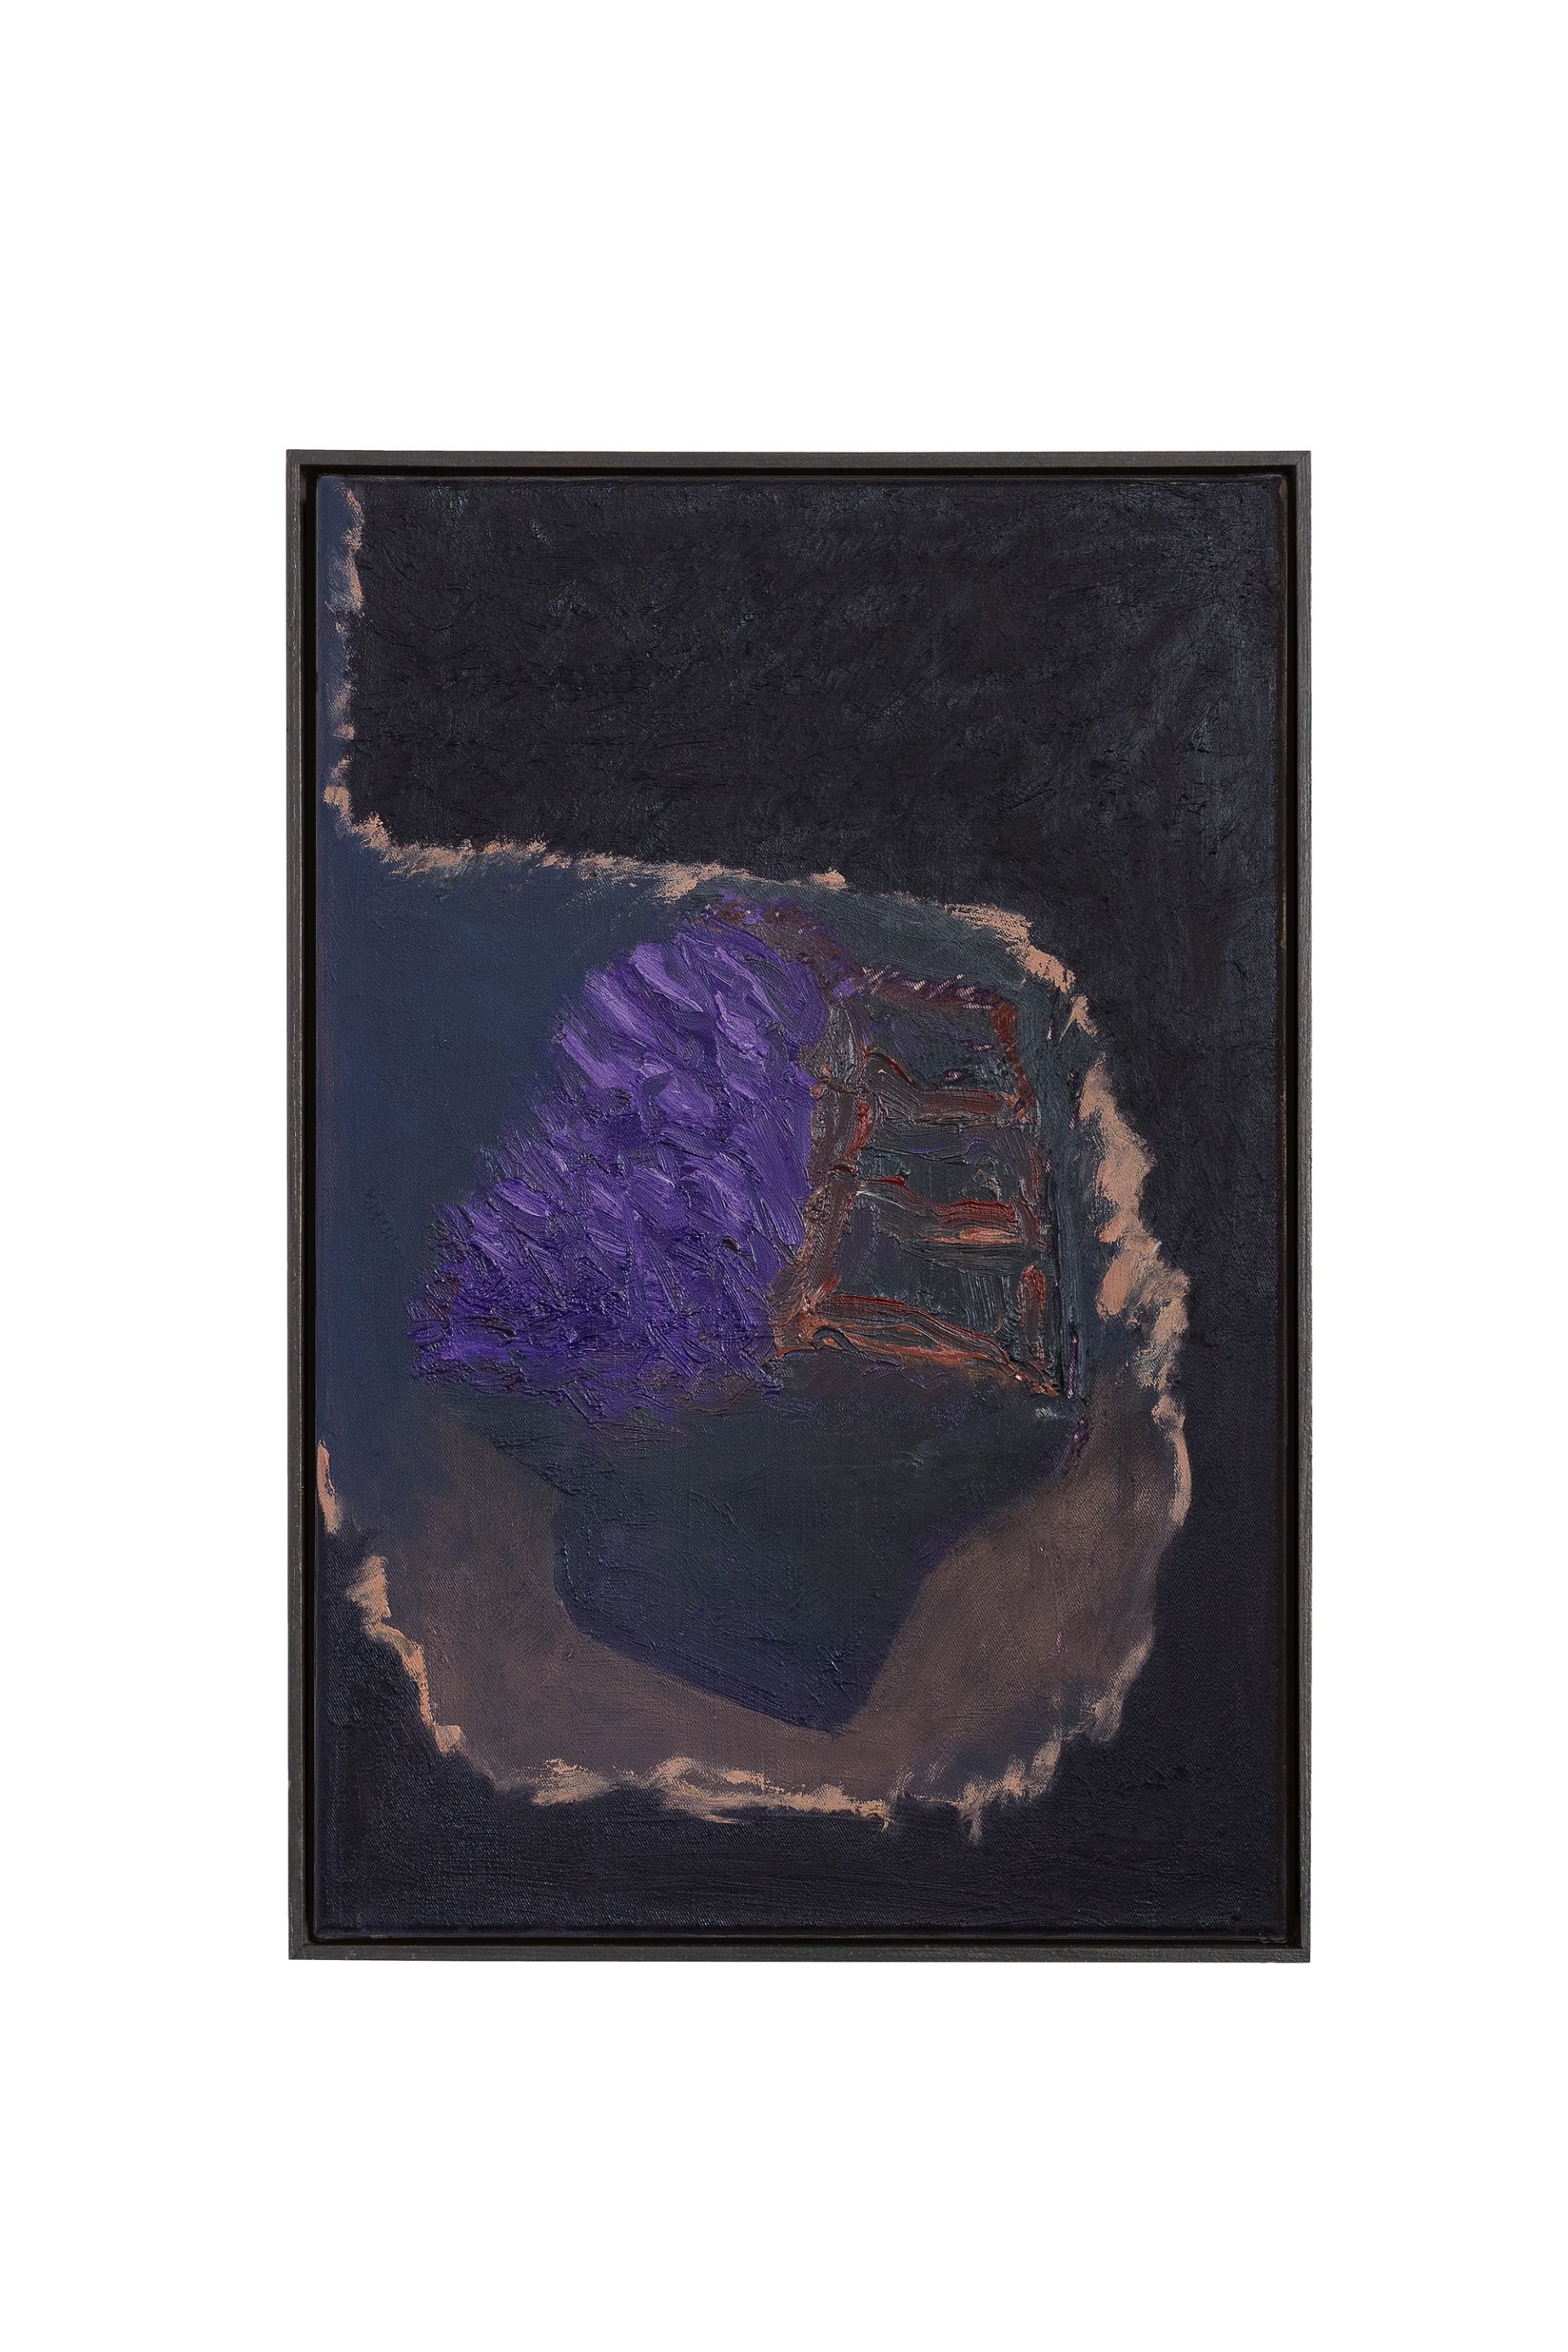 Veronika Hilger, Untitled, 2018, oil on canvas, 45 × 30 cm